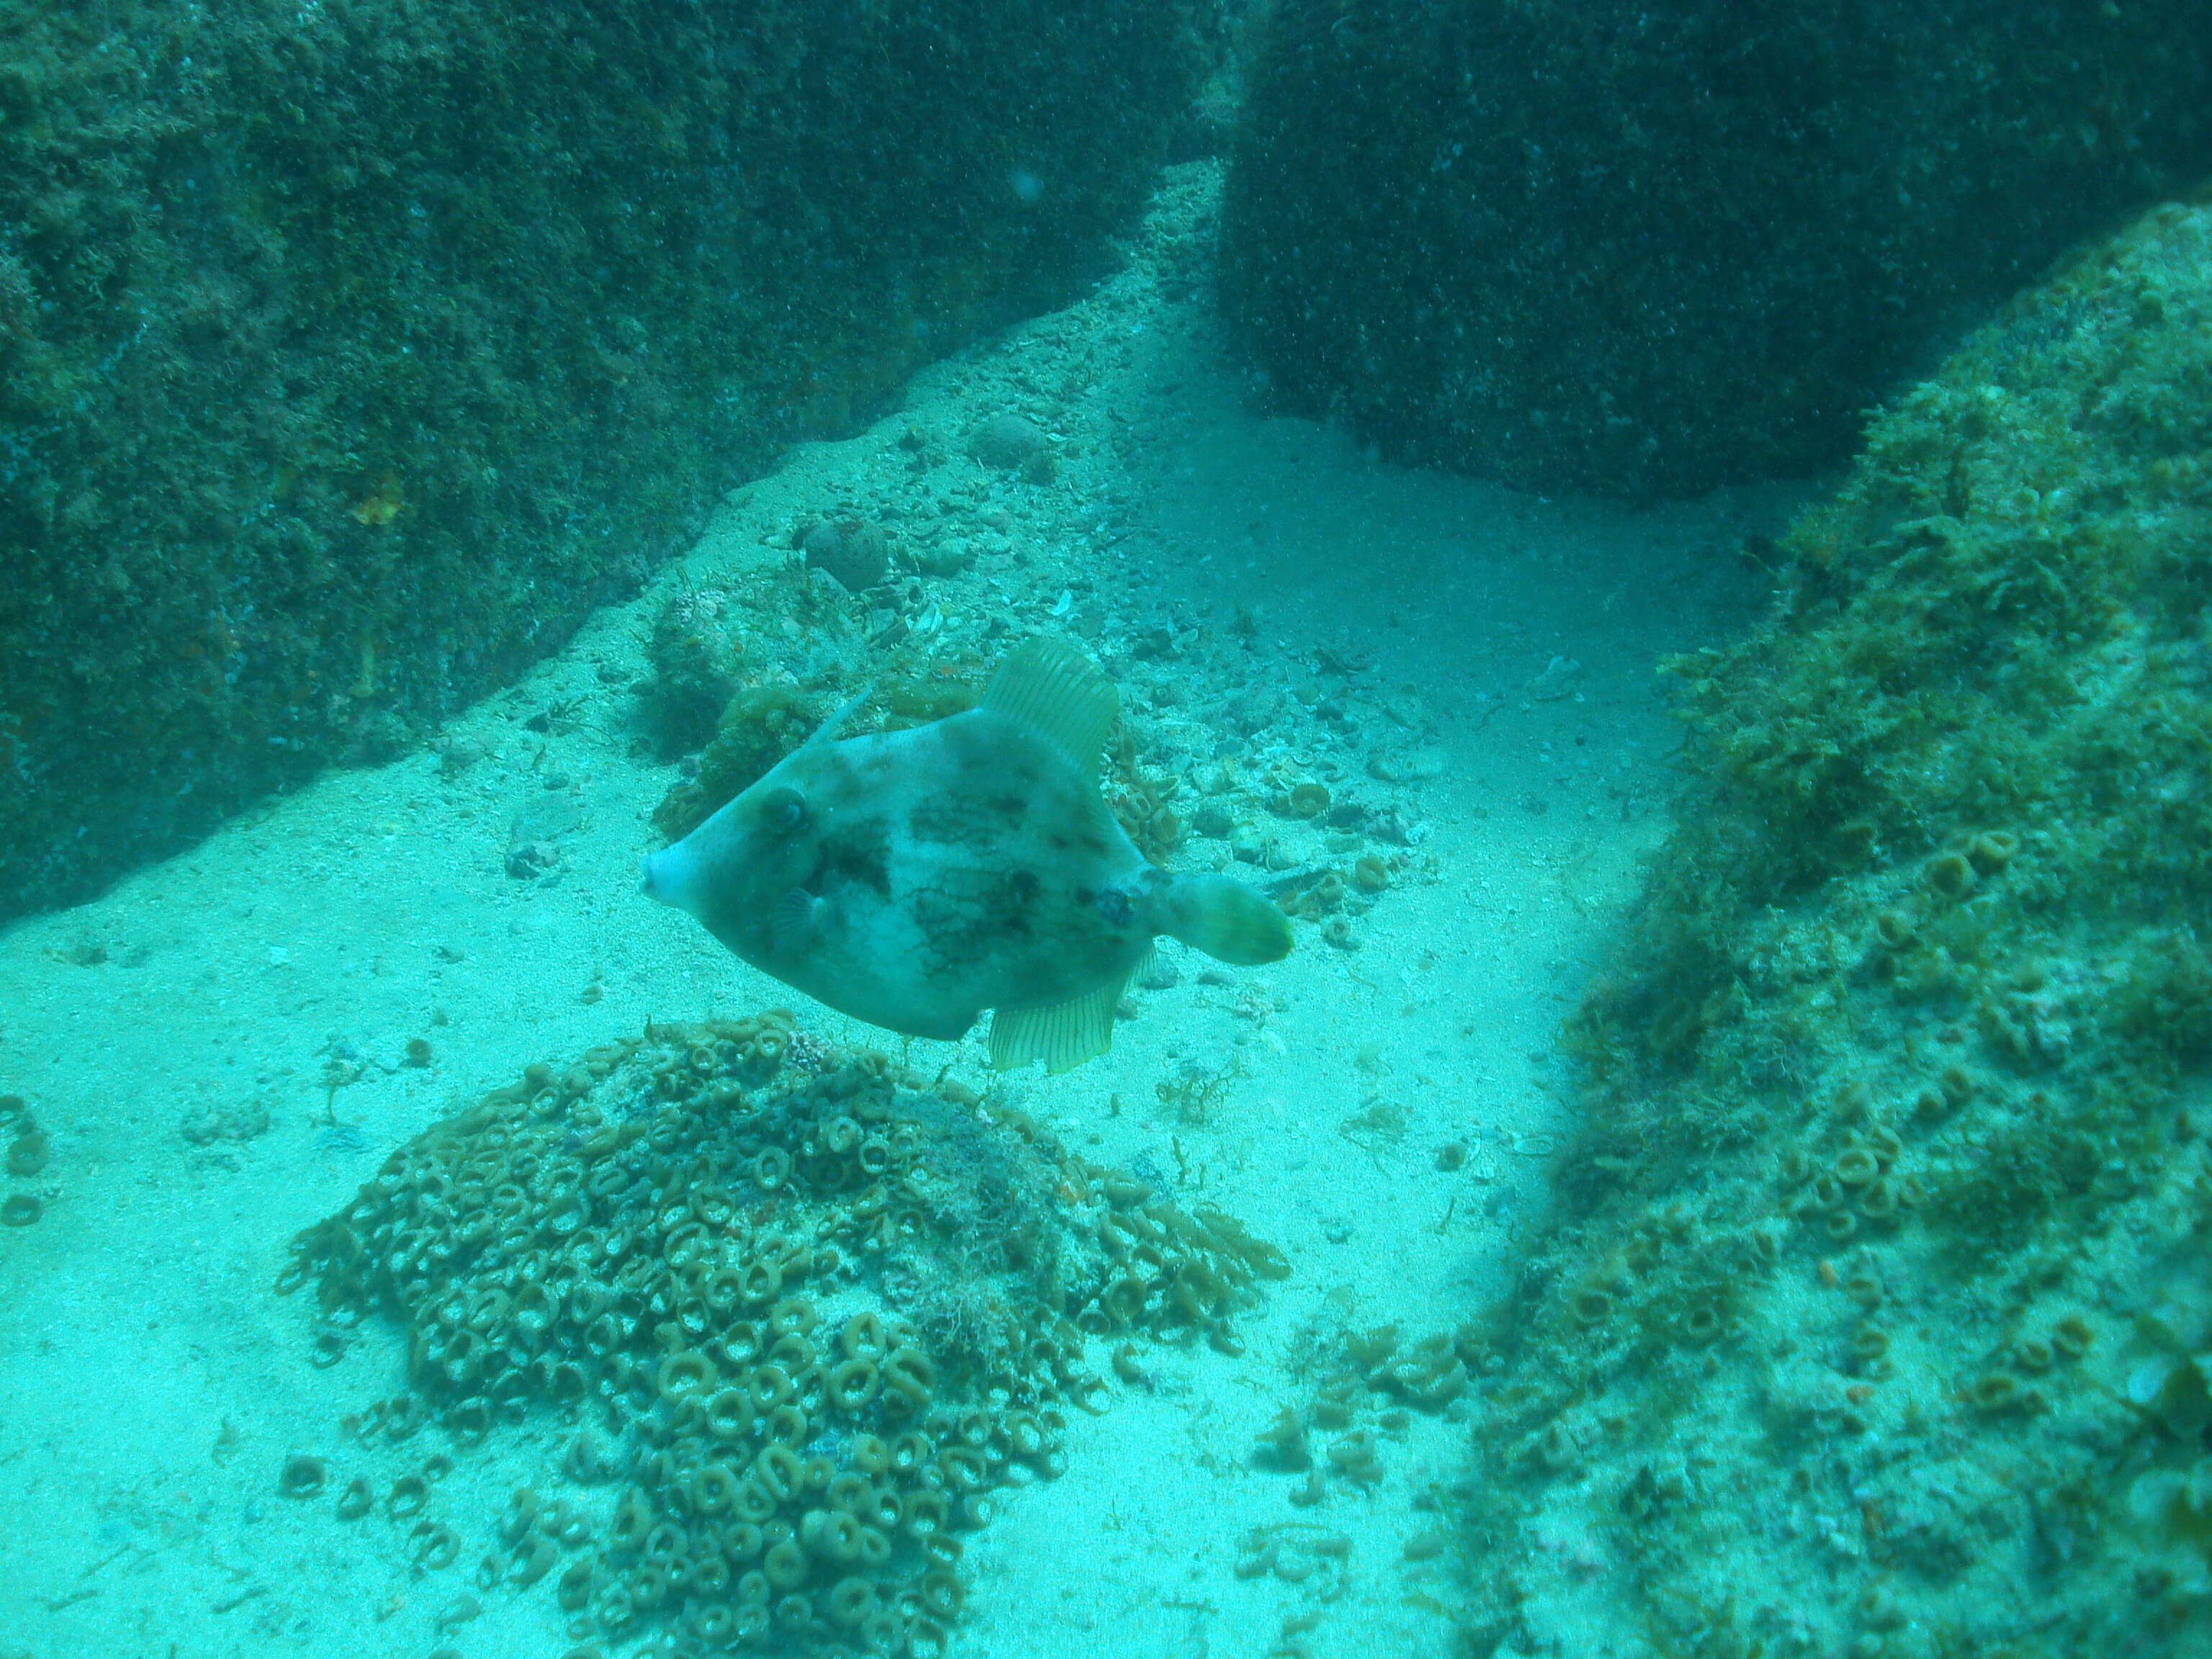 Image of Planehead Filefish